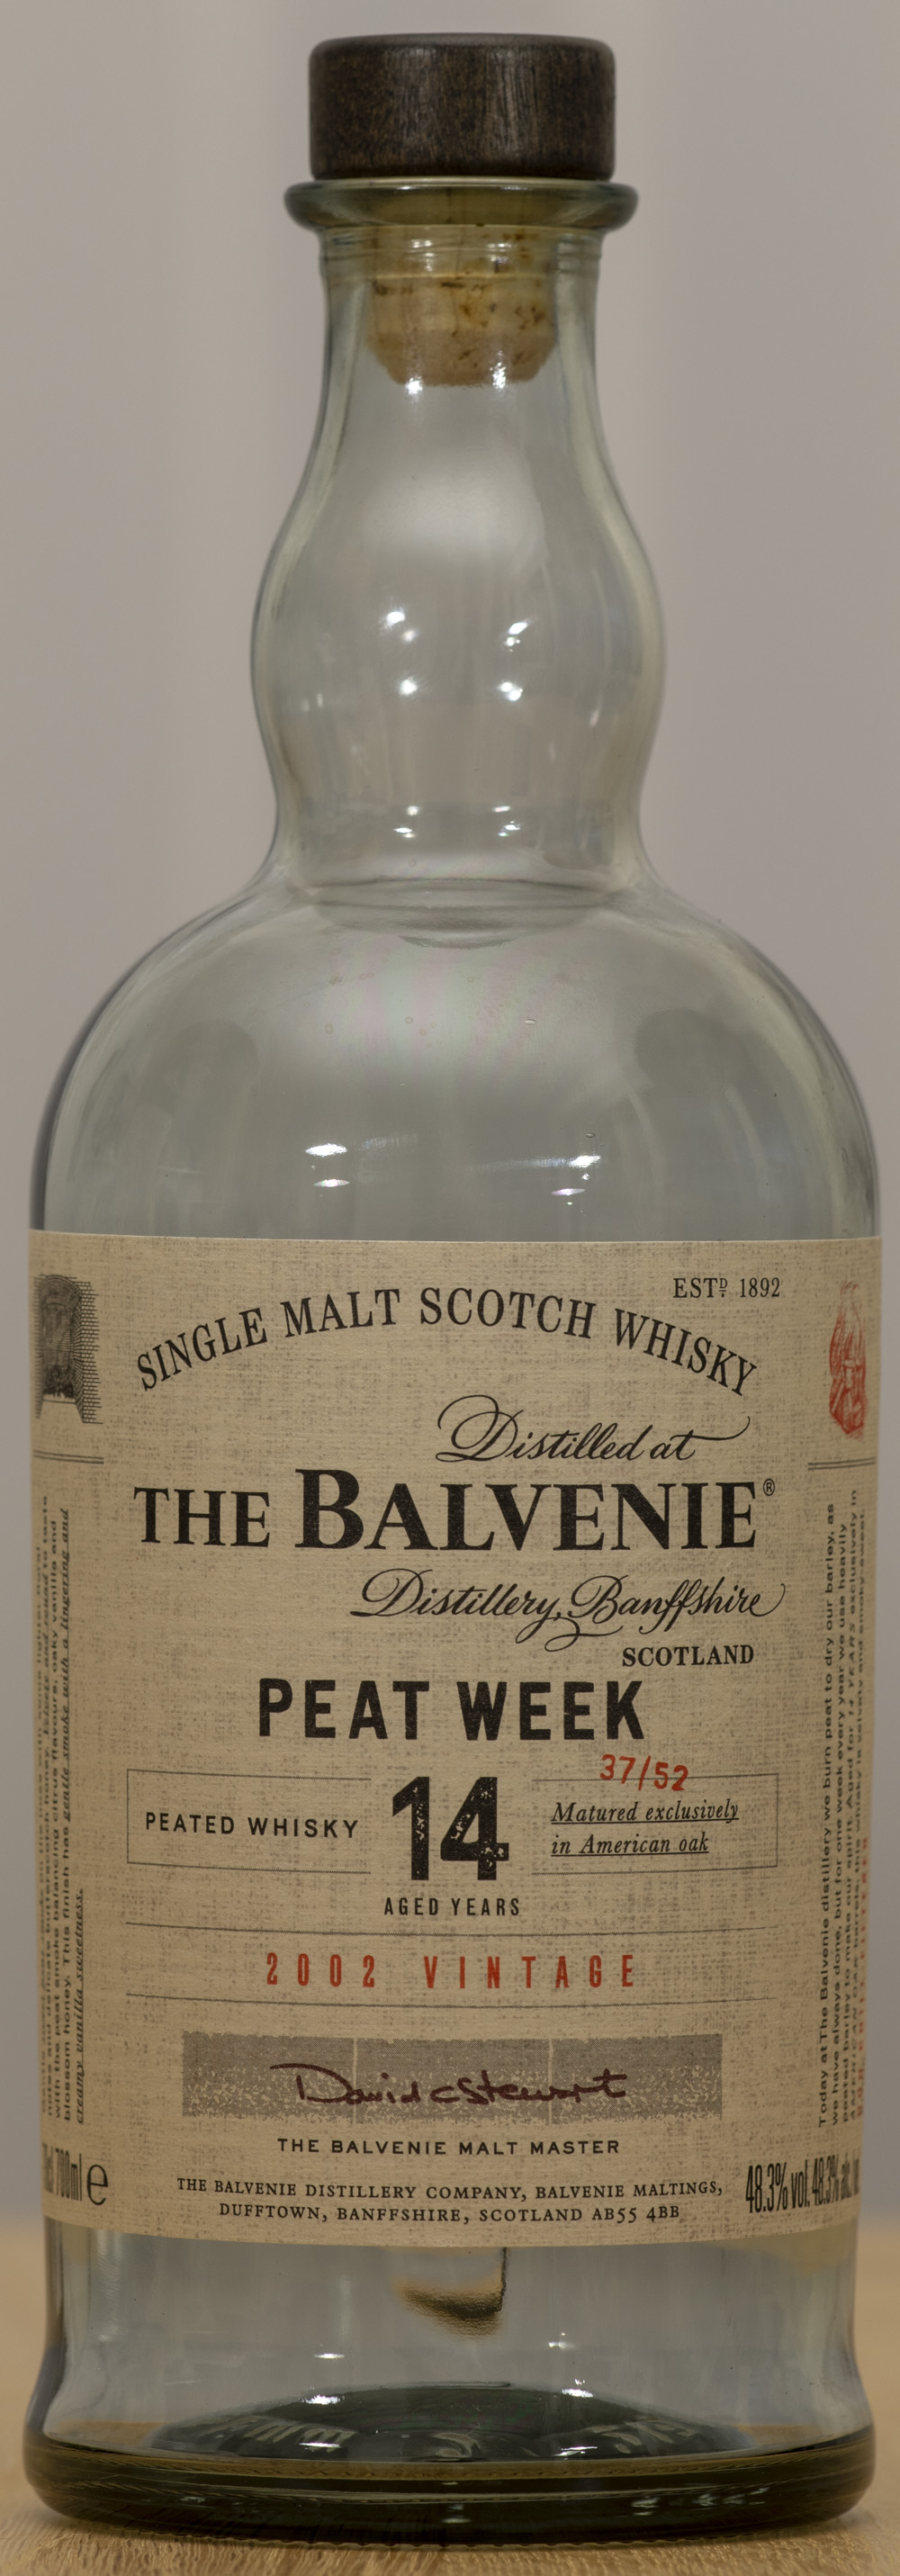 Billede: PHC_1555 - Balvenie Peet Week - bottle front.jpg